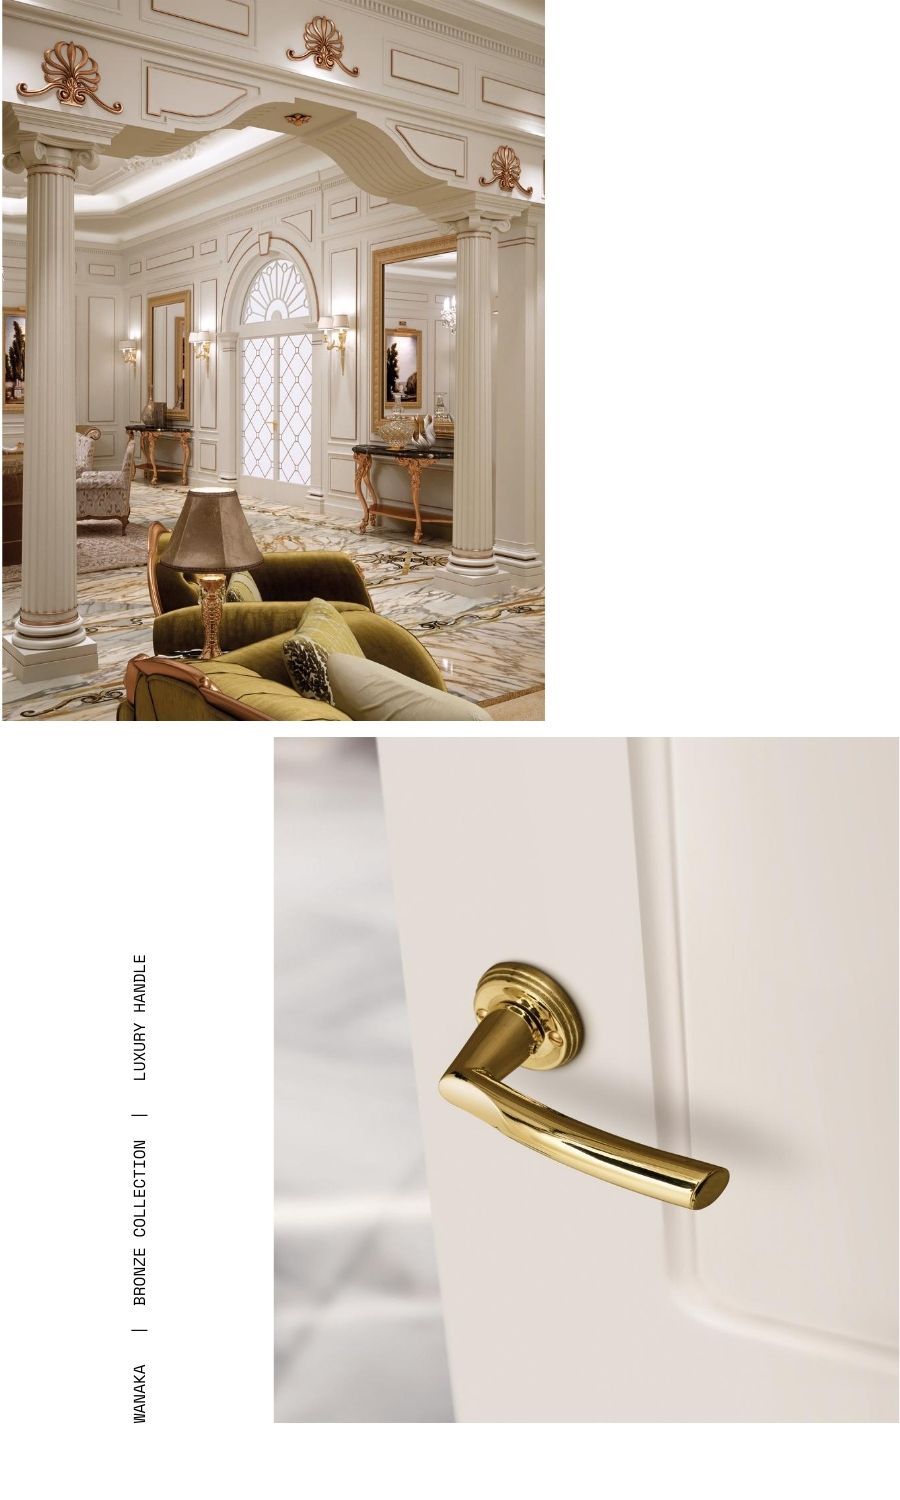 COURMAYEUR LE FABRIC maniglie collezione BRONZO maniglie personalizzate custom doorhandle.